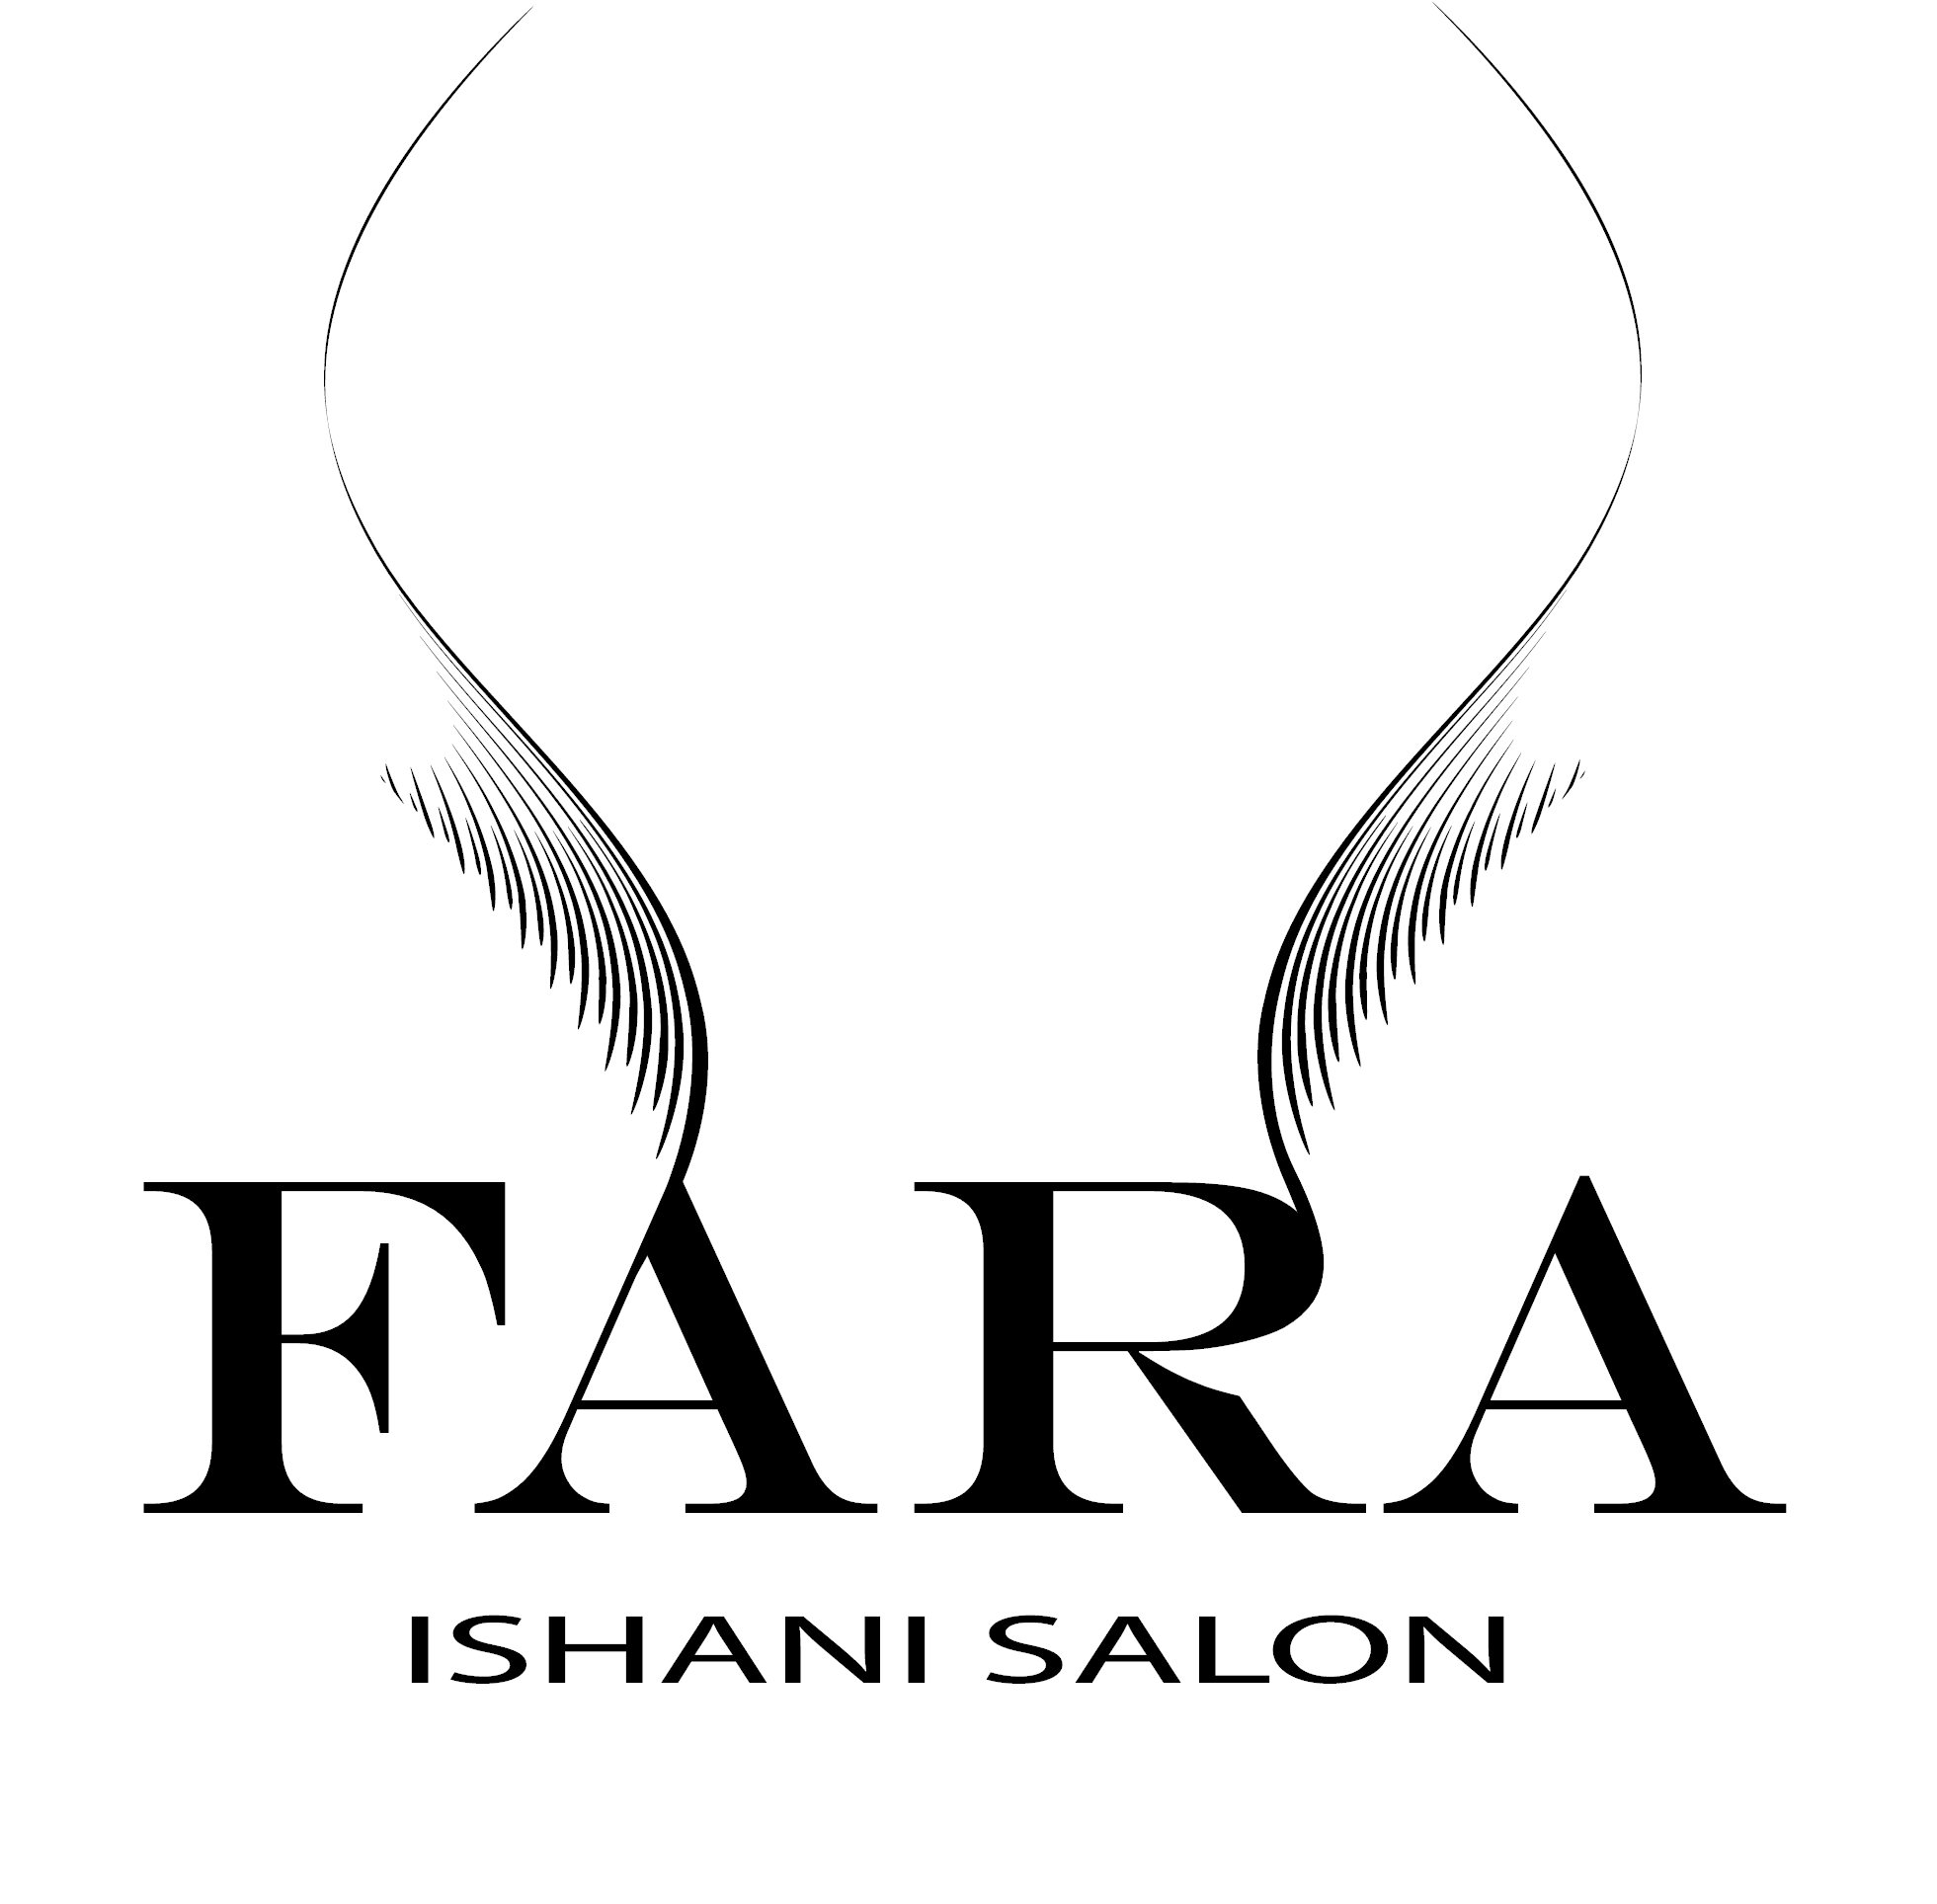 Fara Logo - FARA LOGO BLACK WHITE BACKGROUND. FARA ISHANI SALON